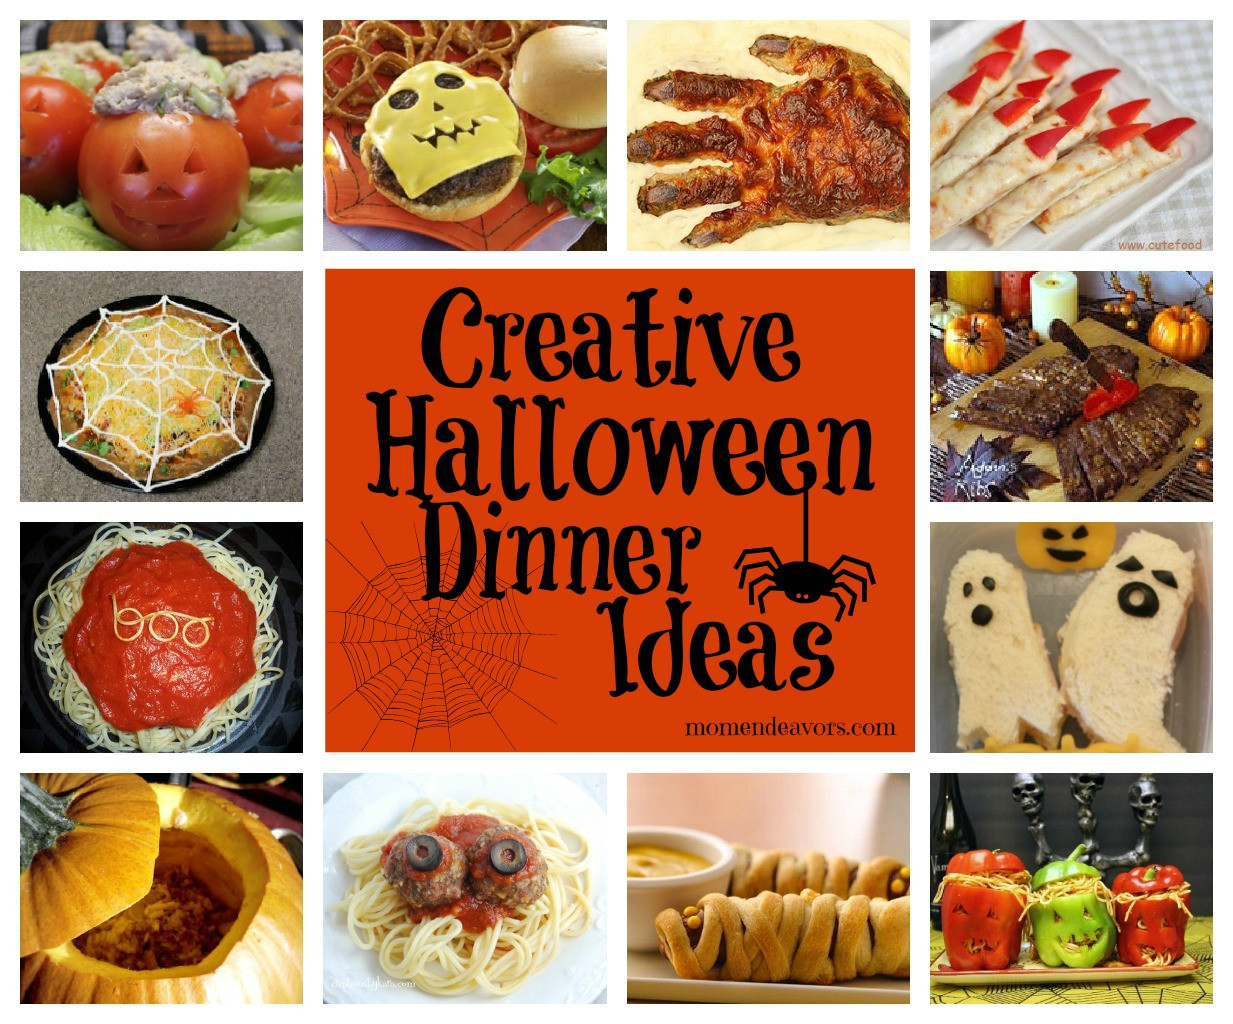 Fun Halloween Dinners Ideas
 15 Creative Halloween Dinner Ideas